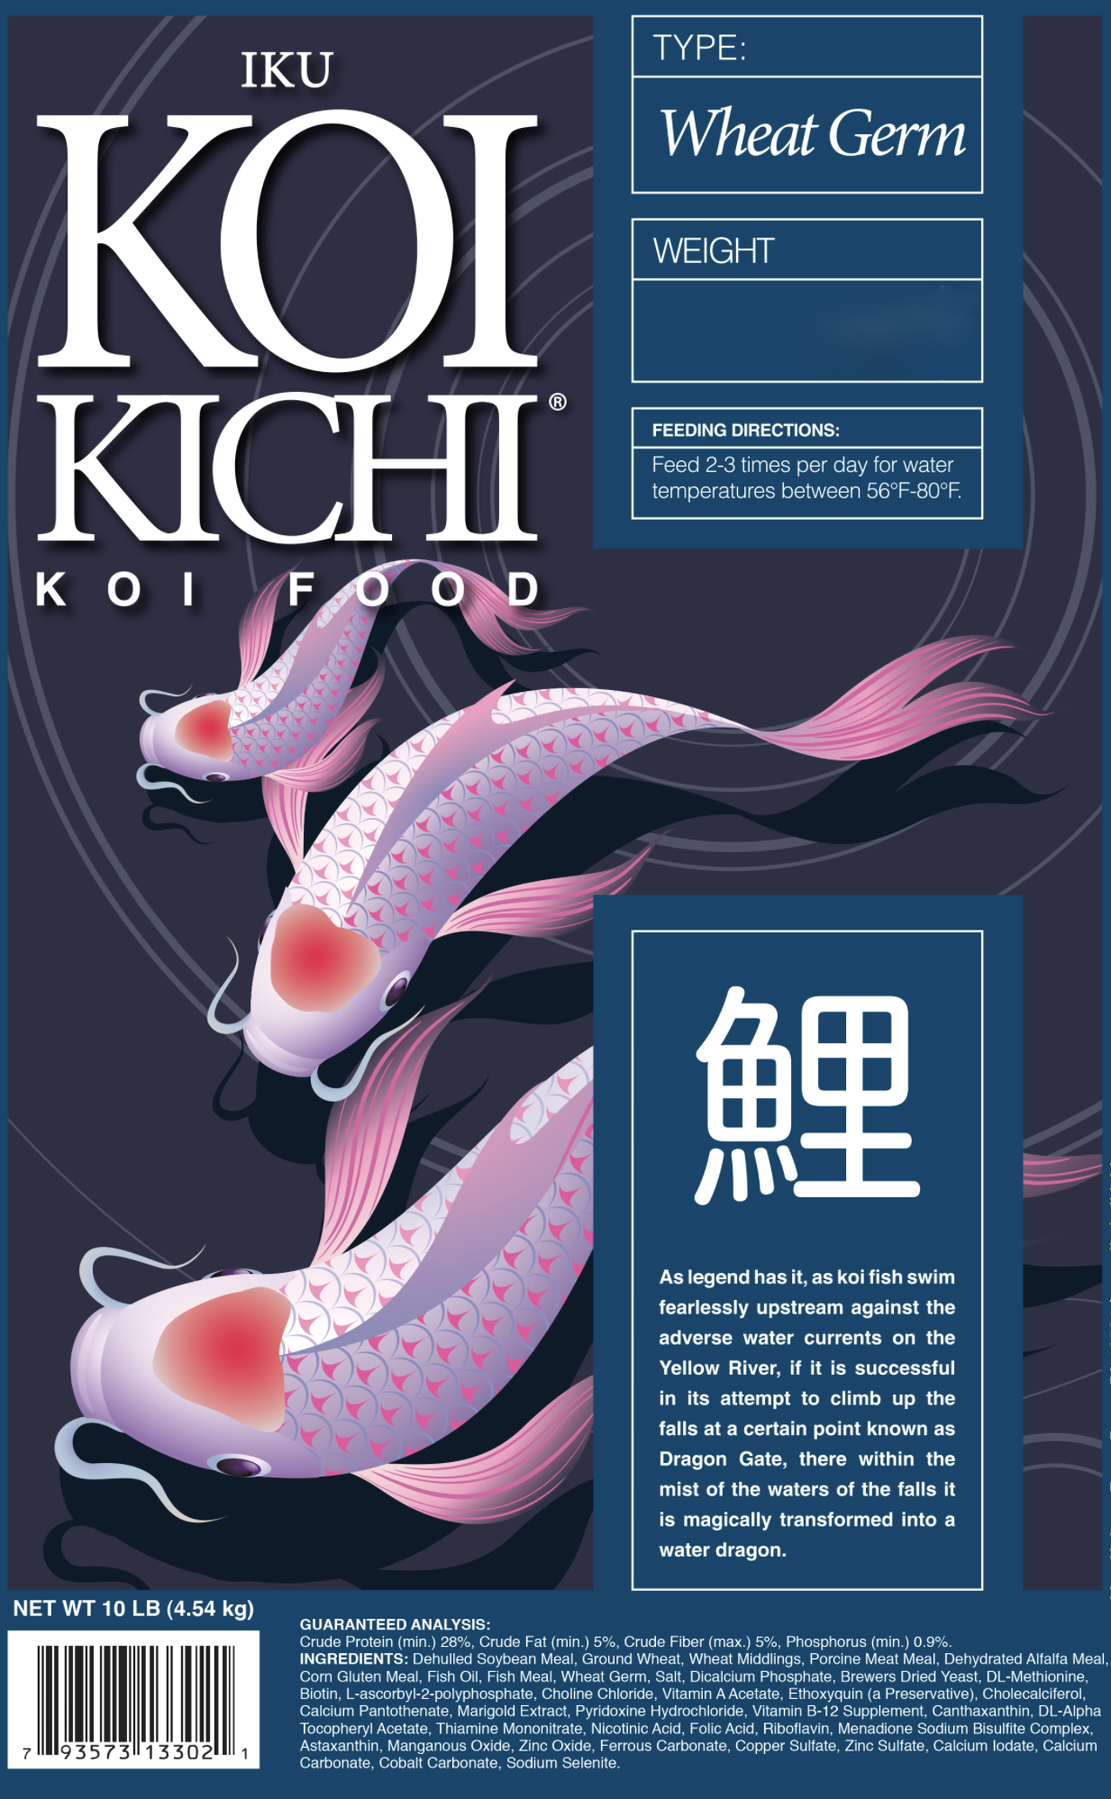 Iku Koi Kichi Wheat Germ Koi Fish Food - 40 lbs.